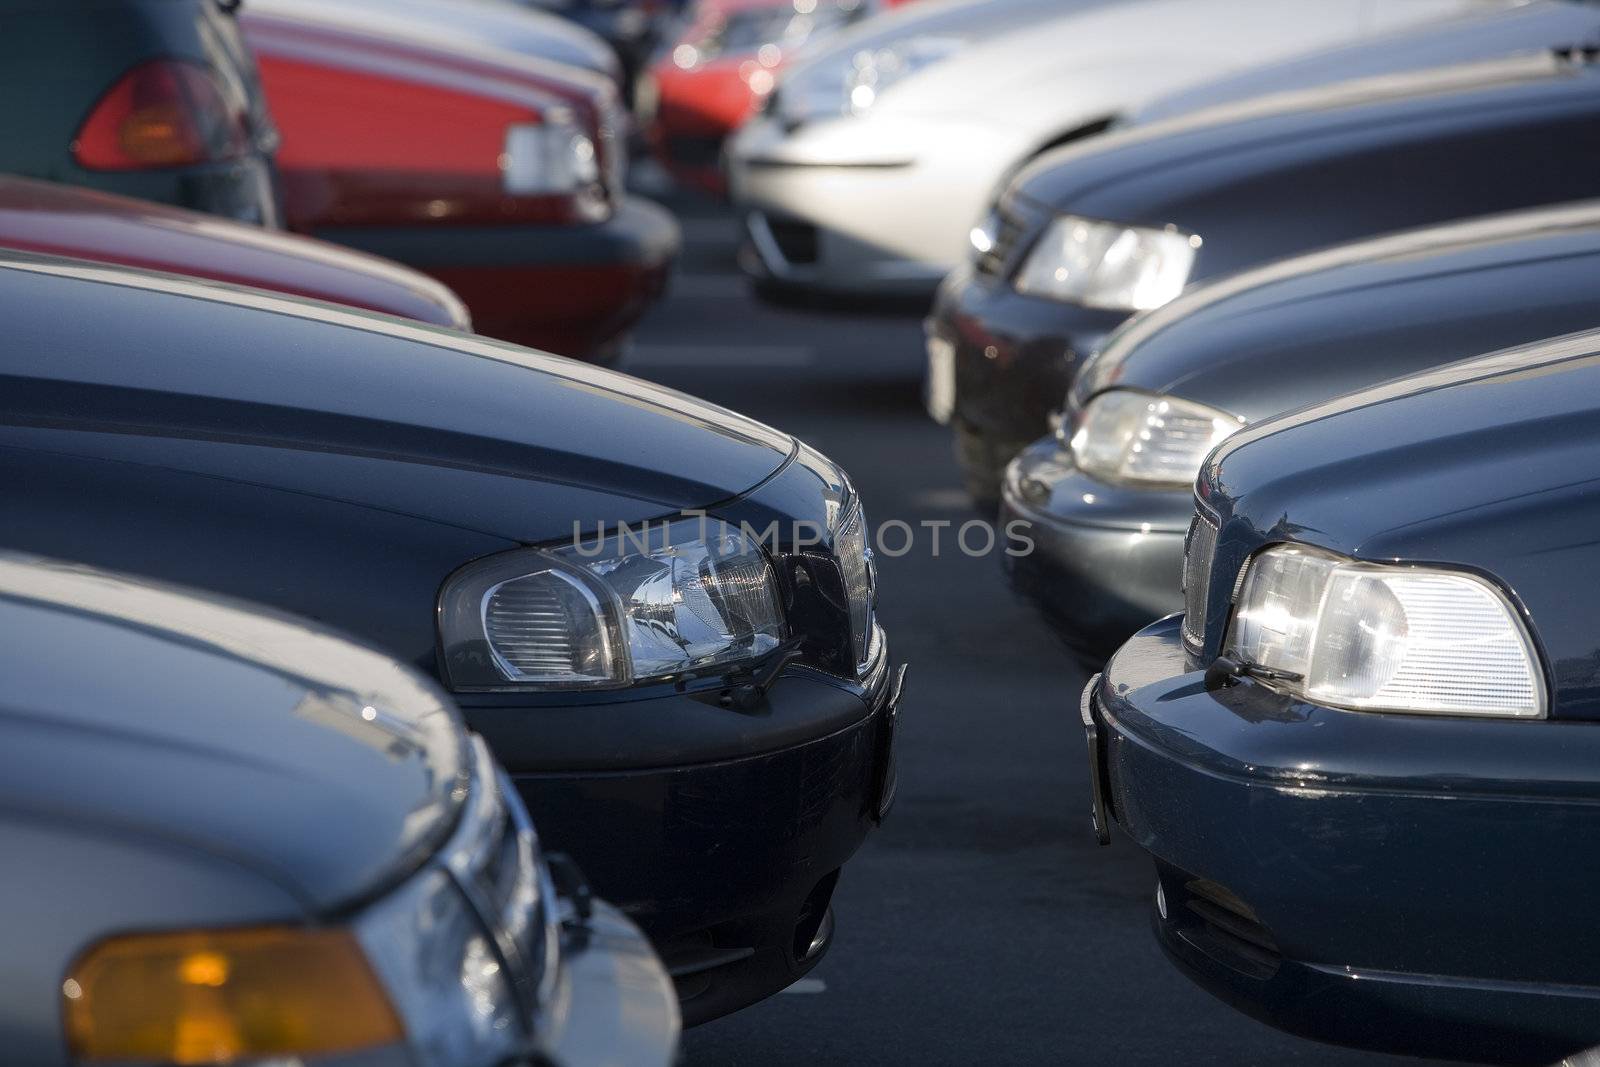 Parked Cars by gemenacom